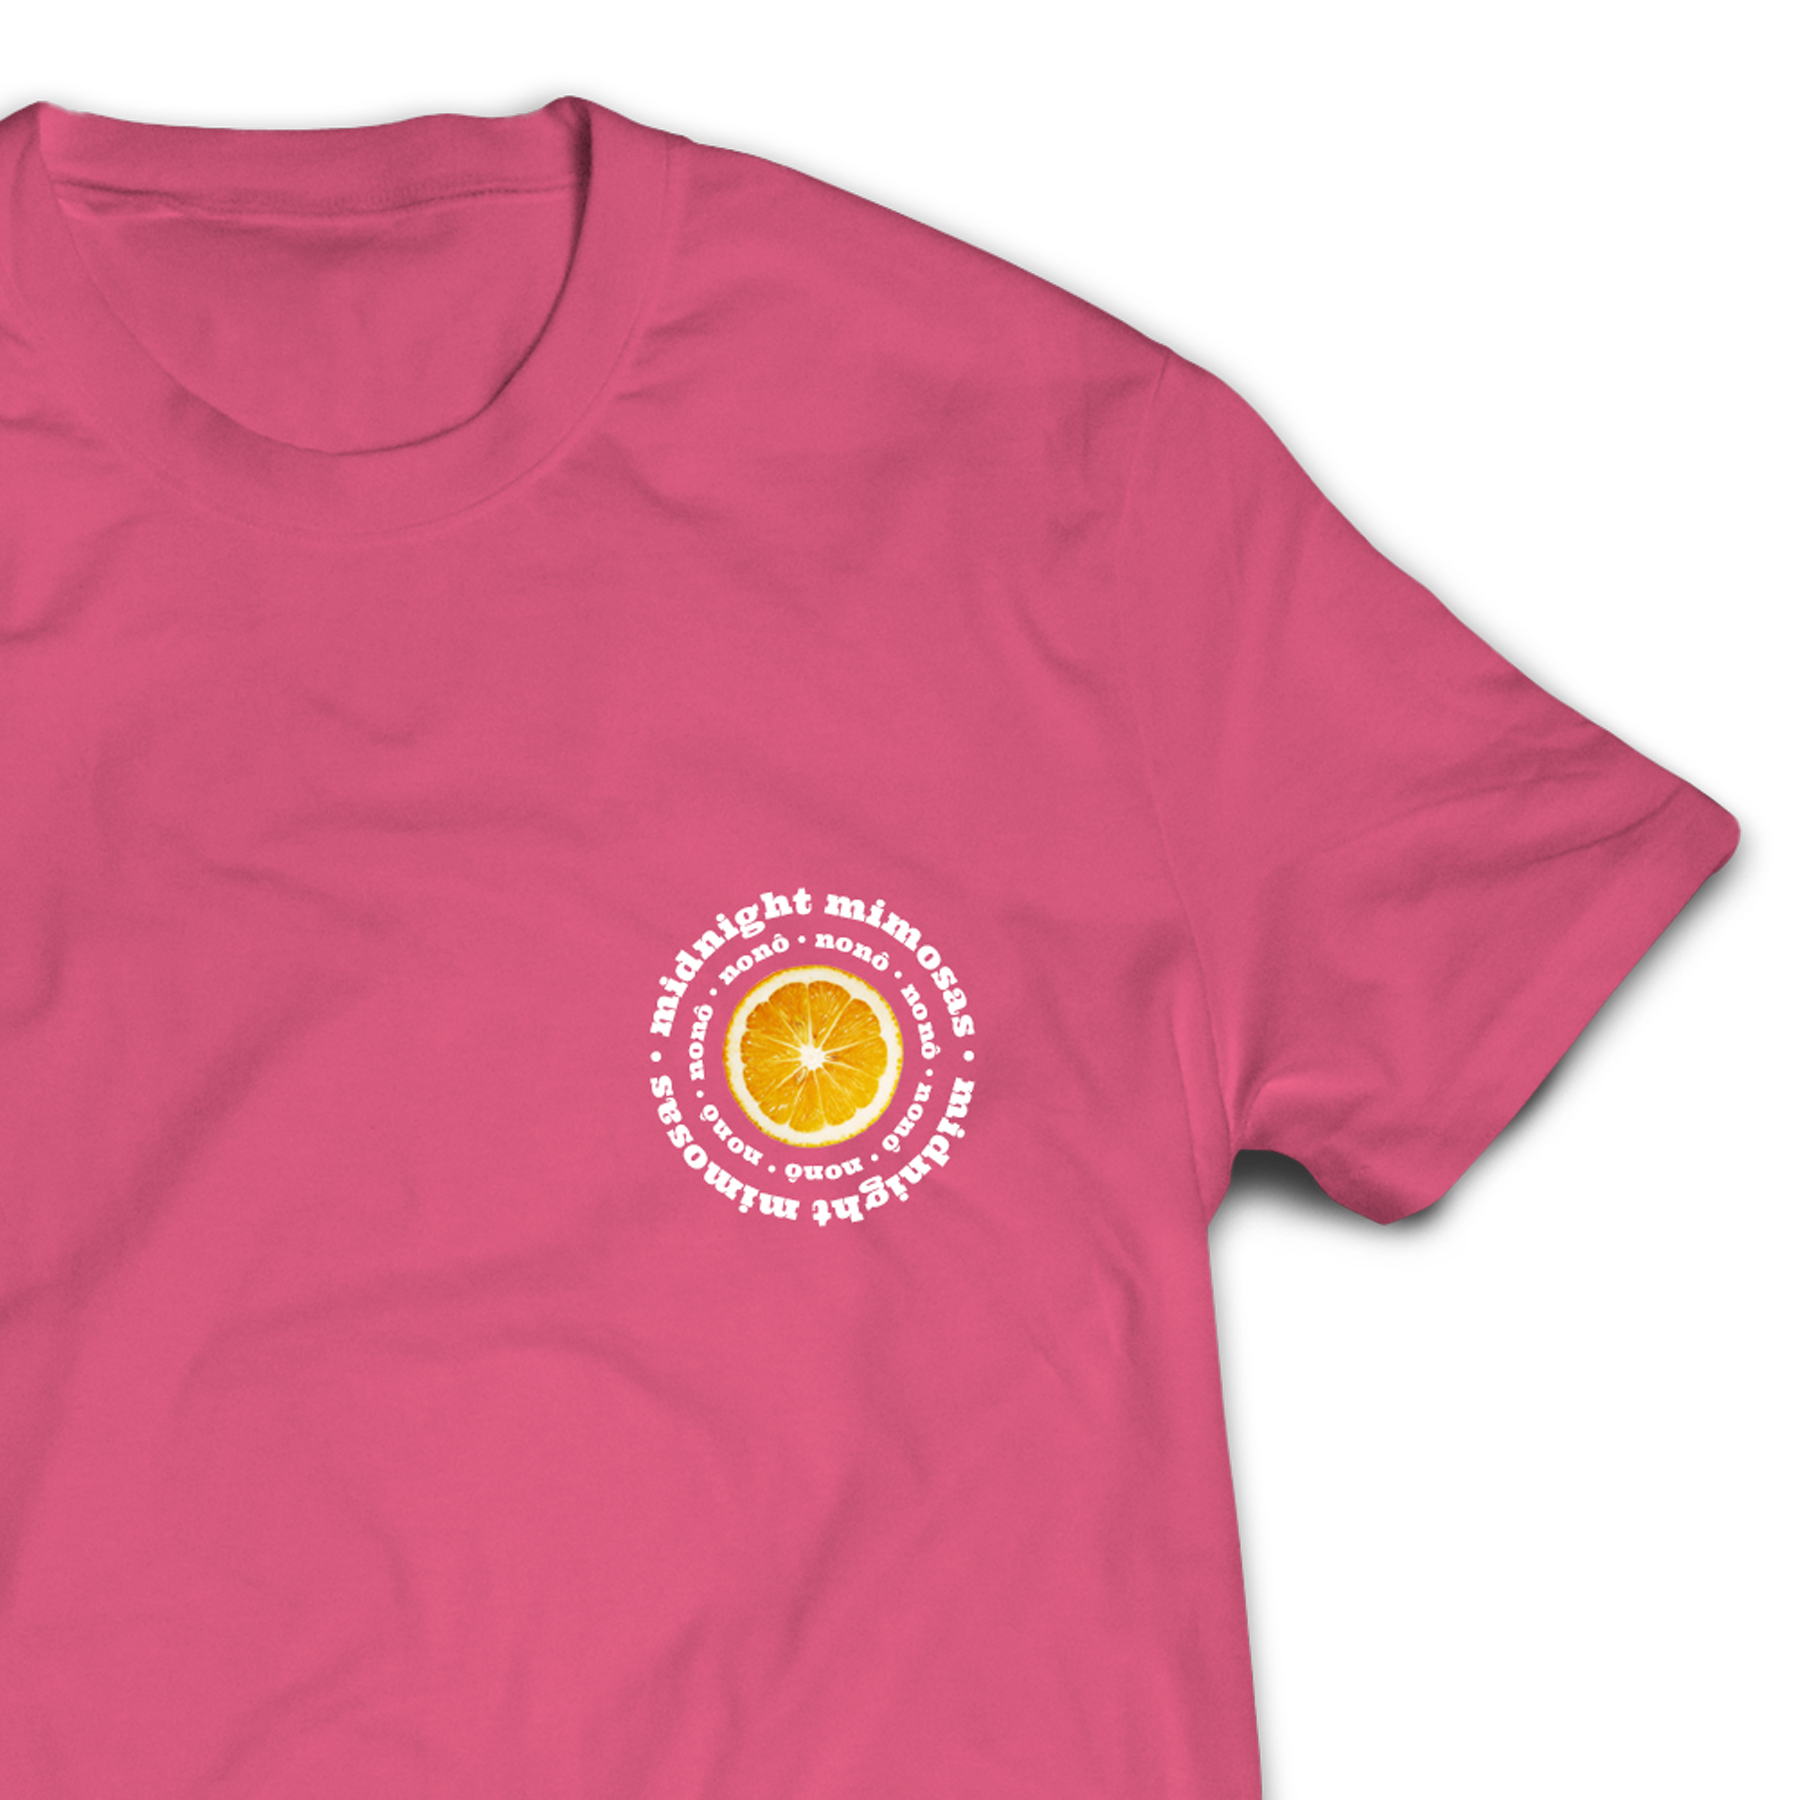 Midnight Mimosas - T-shirt (Pink)